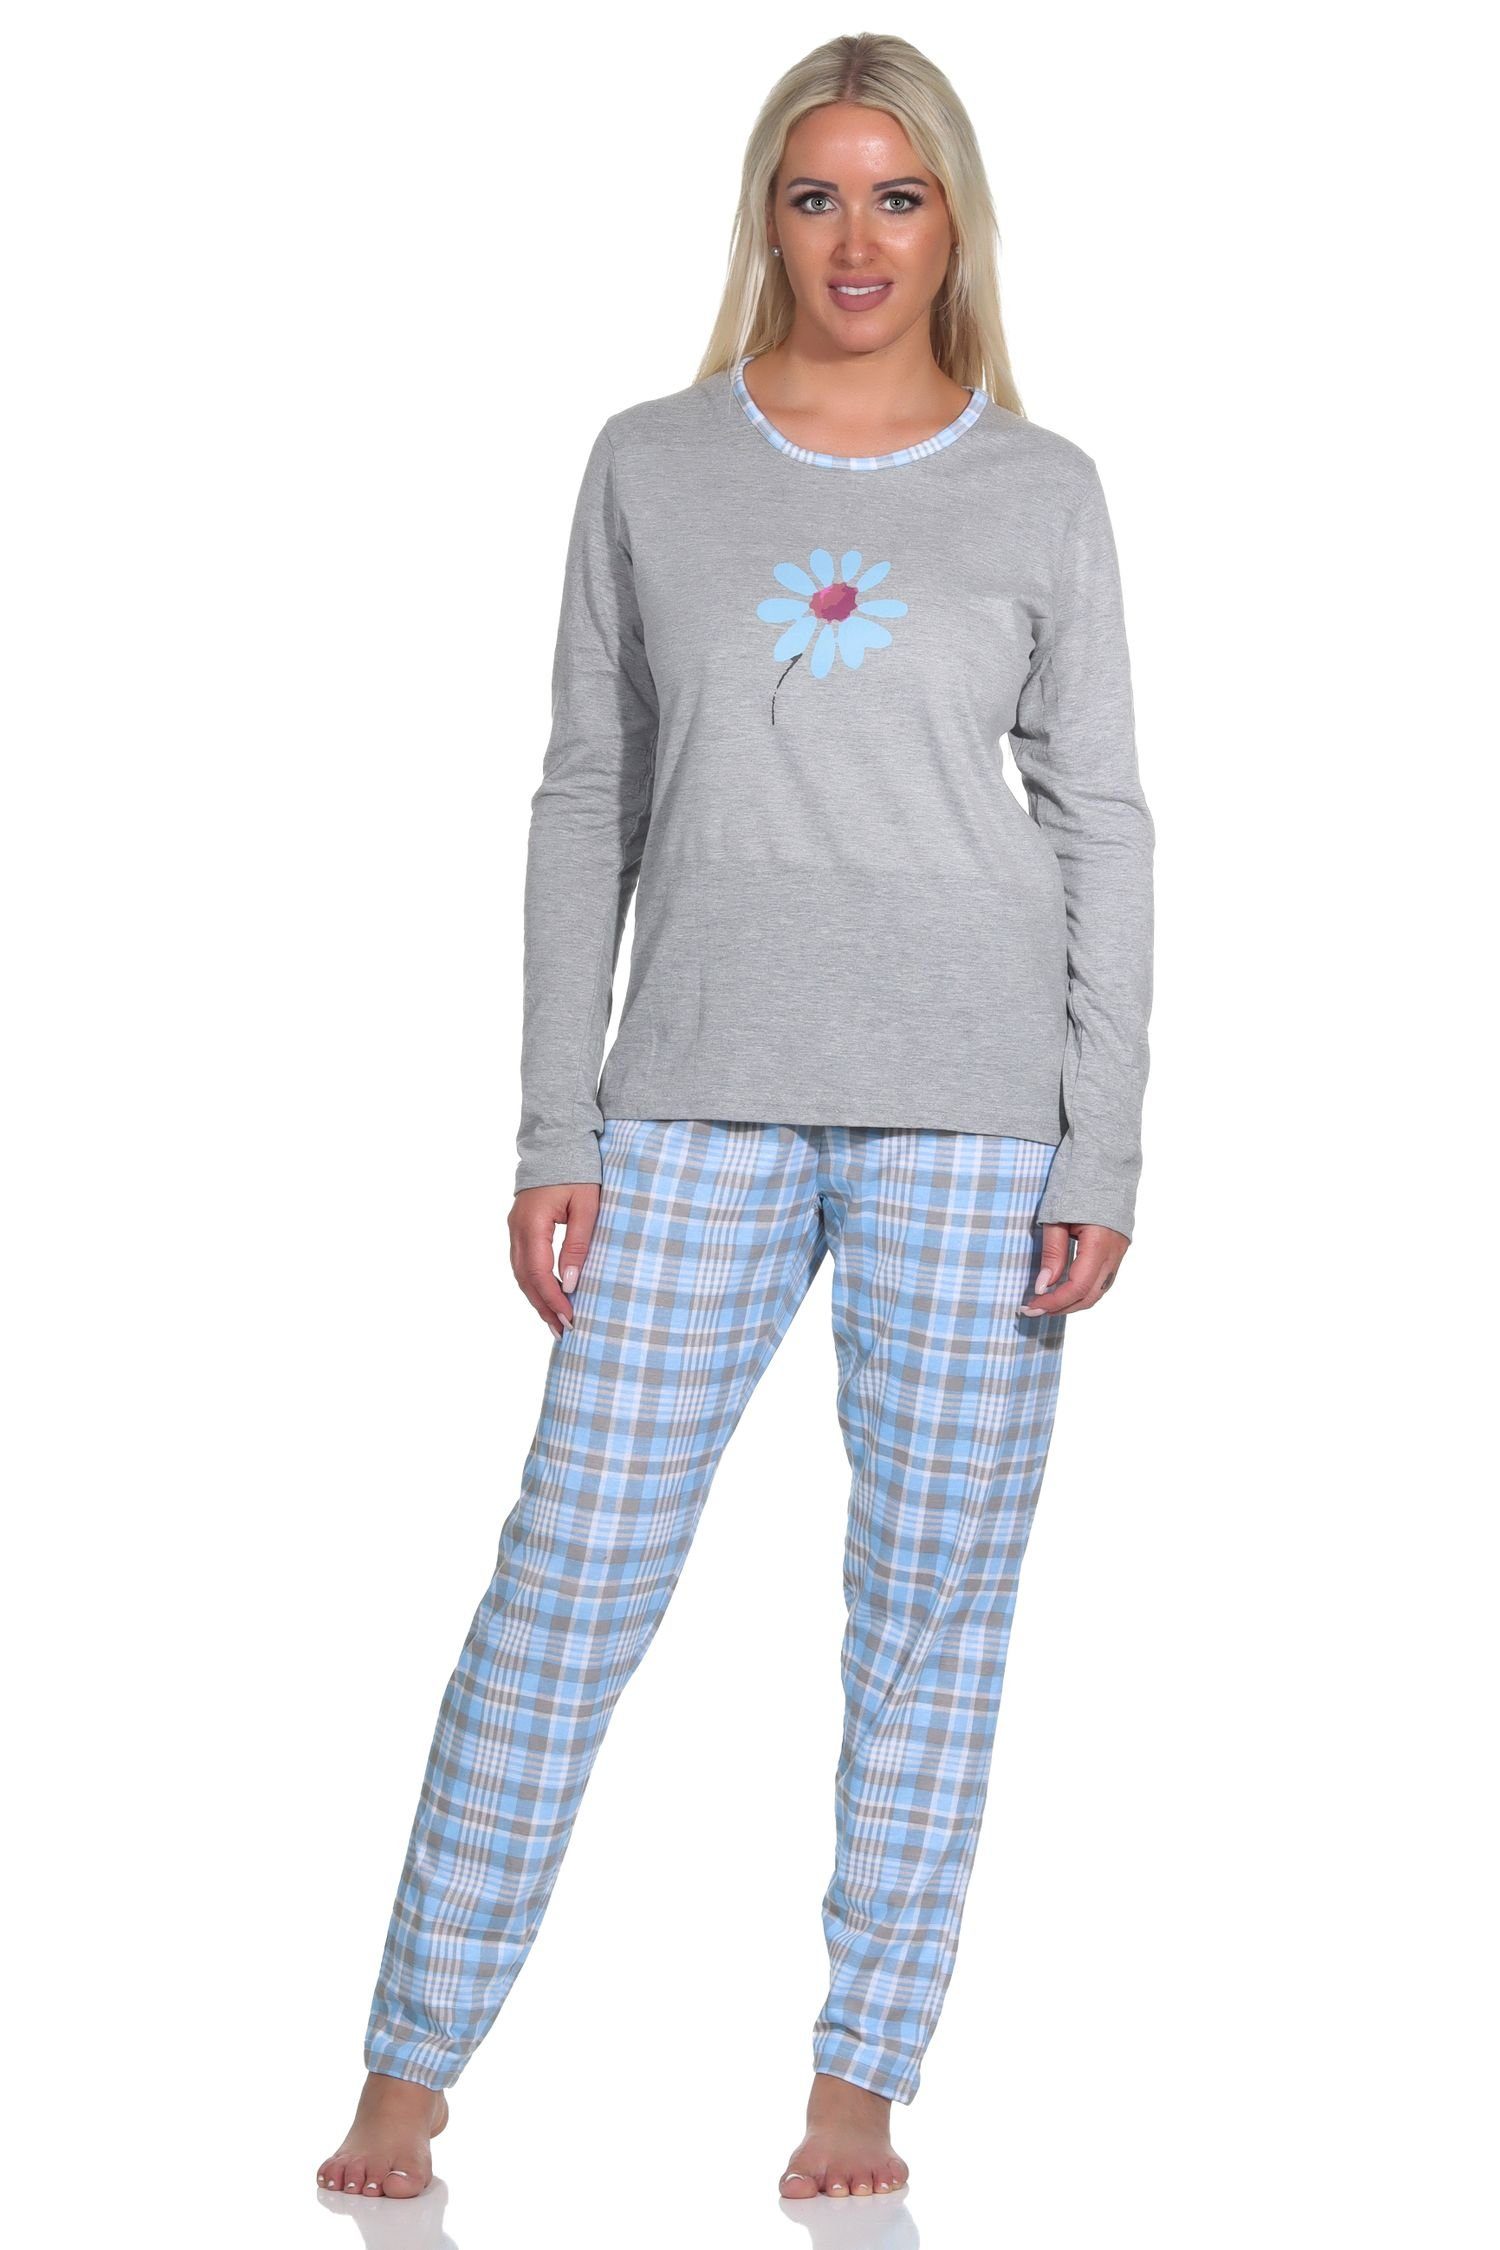 Normann Pyjama Damen Pyjama langarm, Schlafanzug mit Karo-Muster - 112 10 733 hellblau